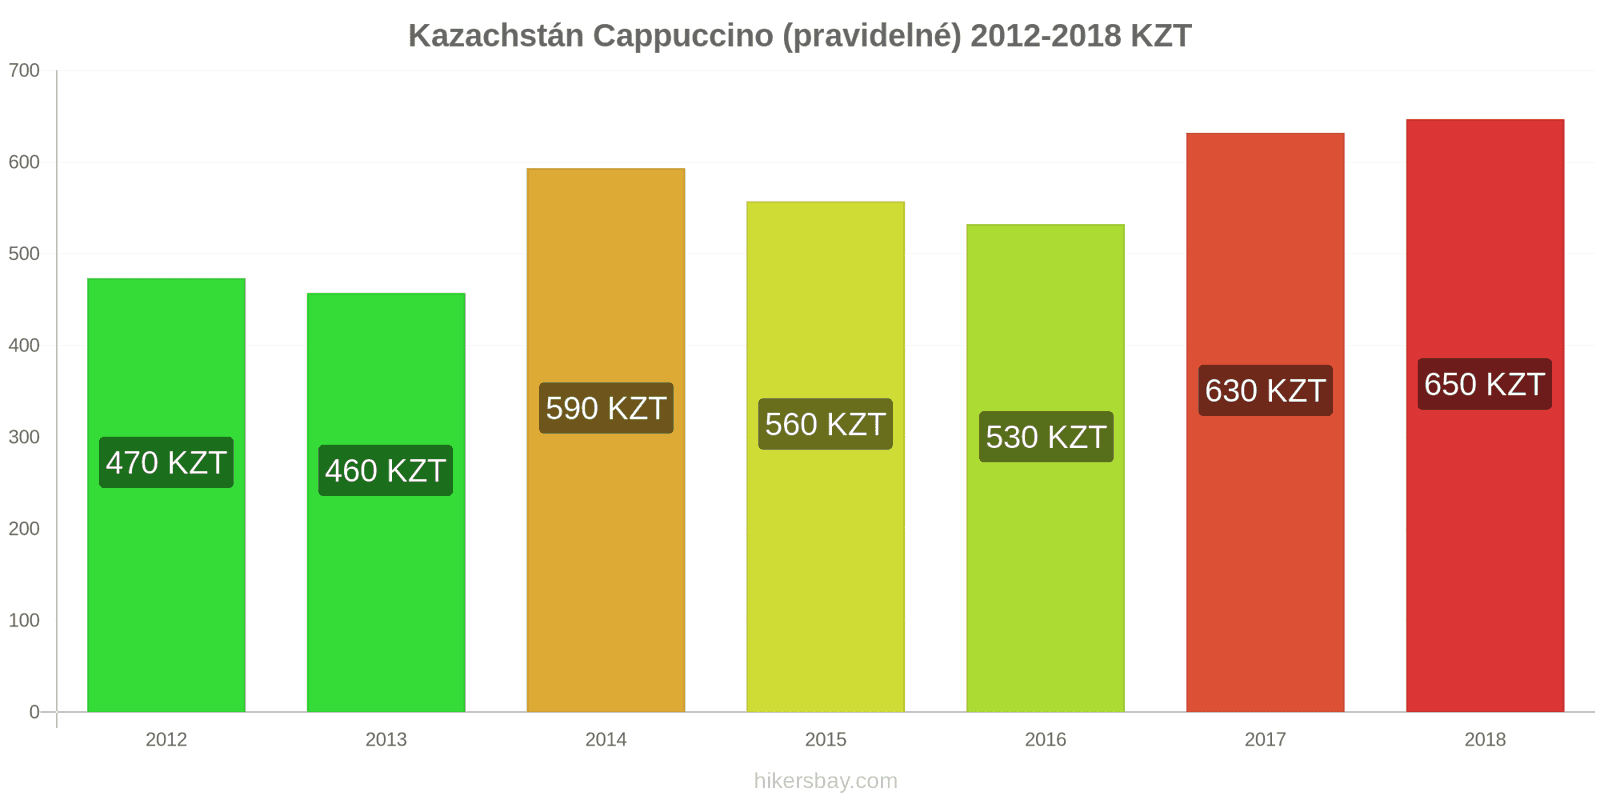 Kazachstán změny cen Cappuccino hikersbay.com